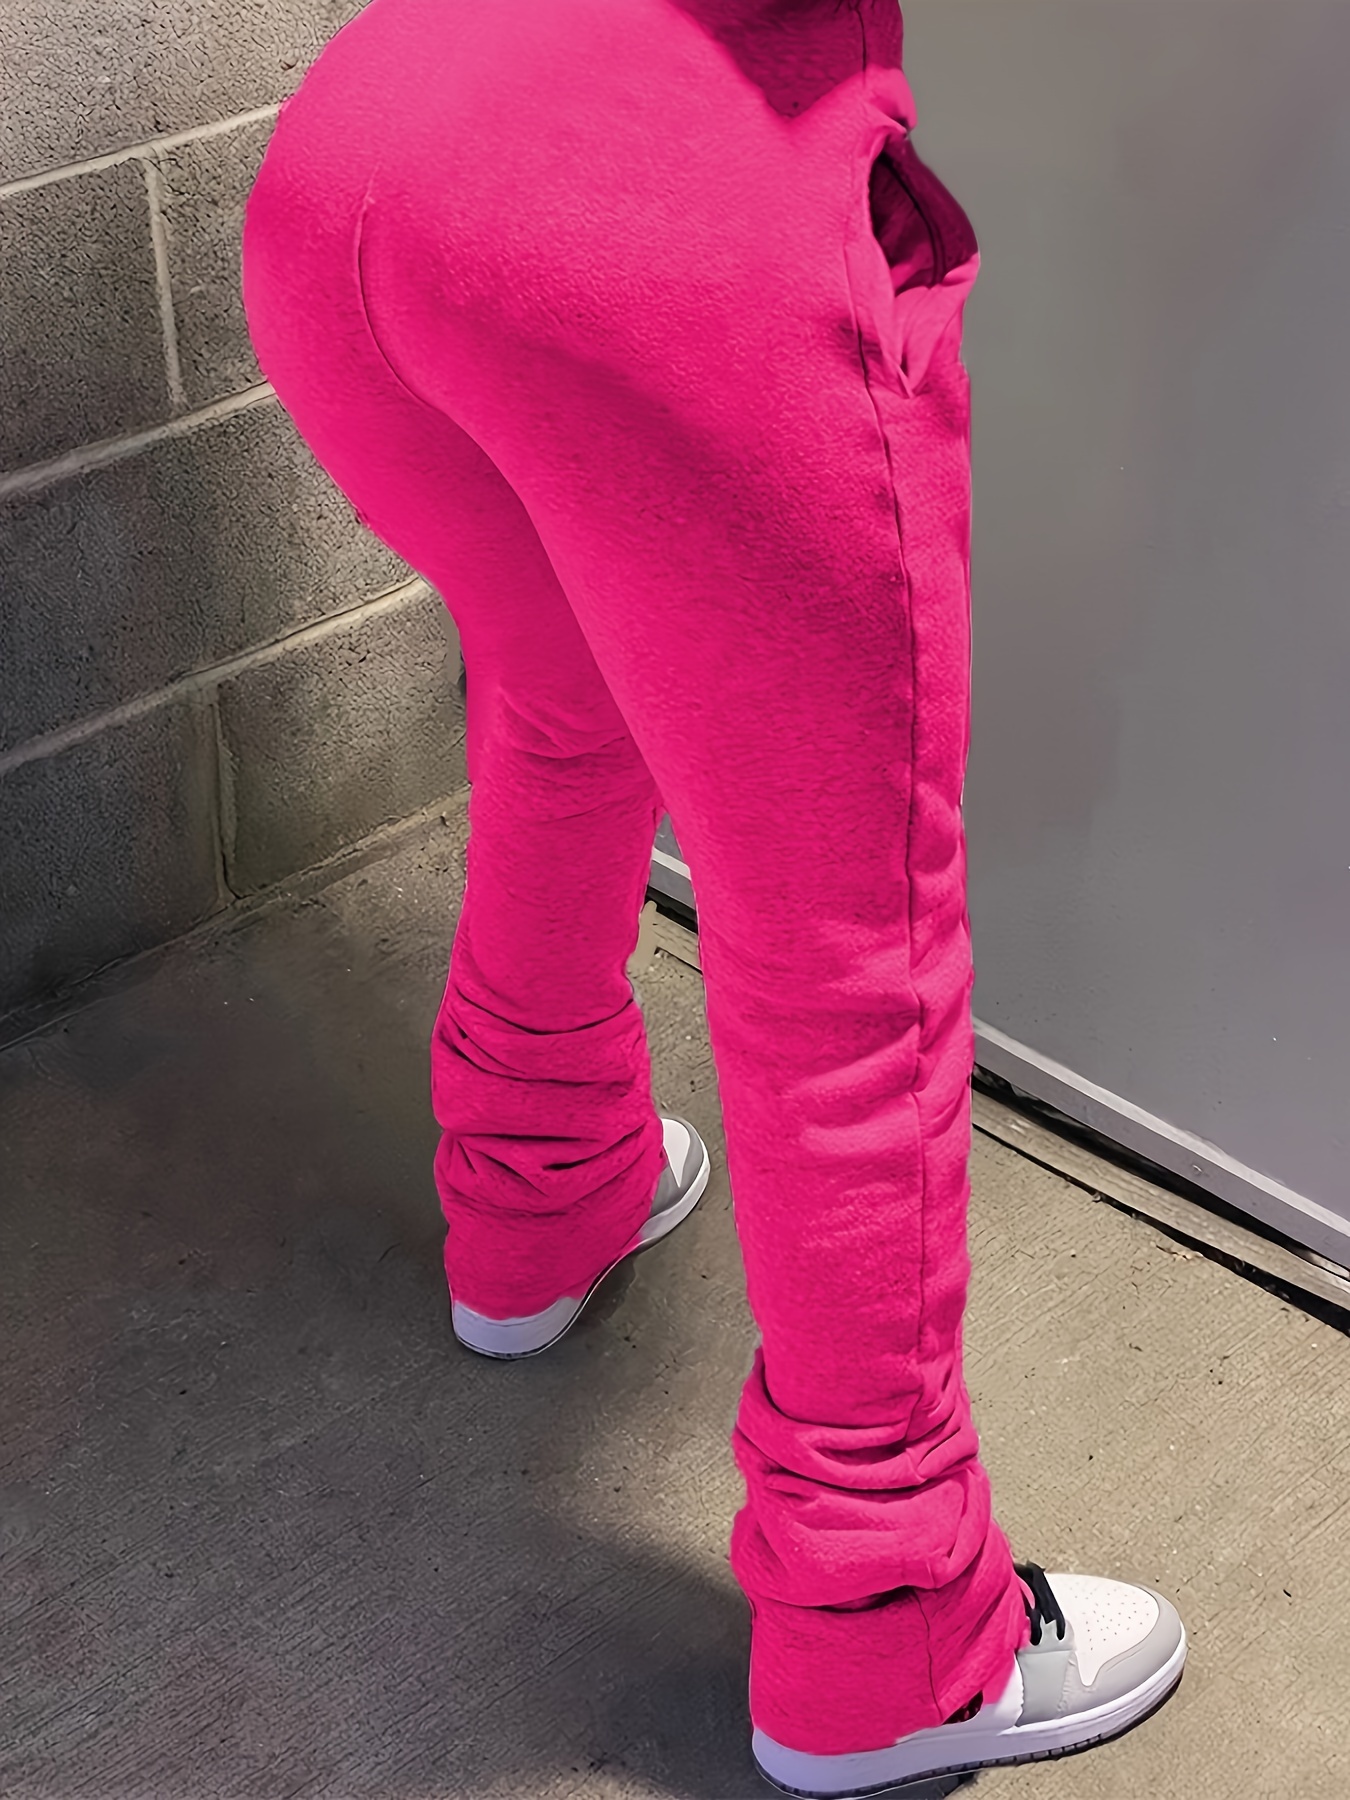 PINK Rhinestone Athletic Pants for Women